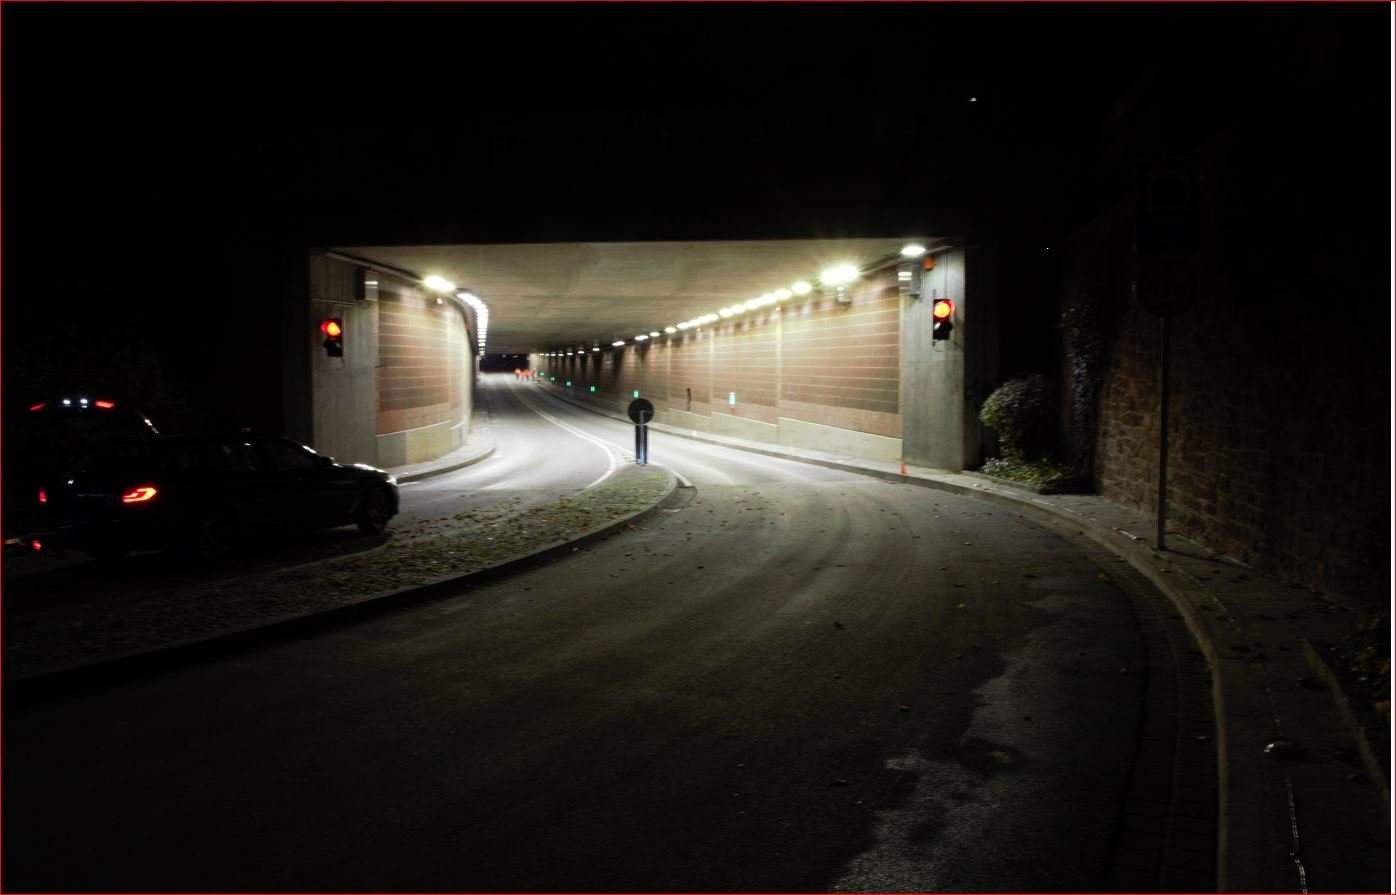 Landingtunnel Aschaffenburg (Germany) LED